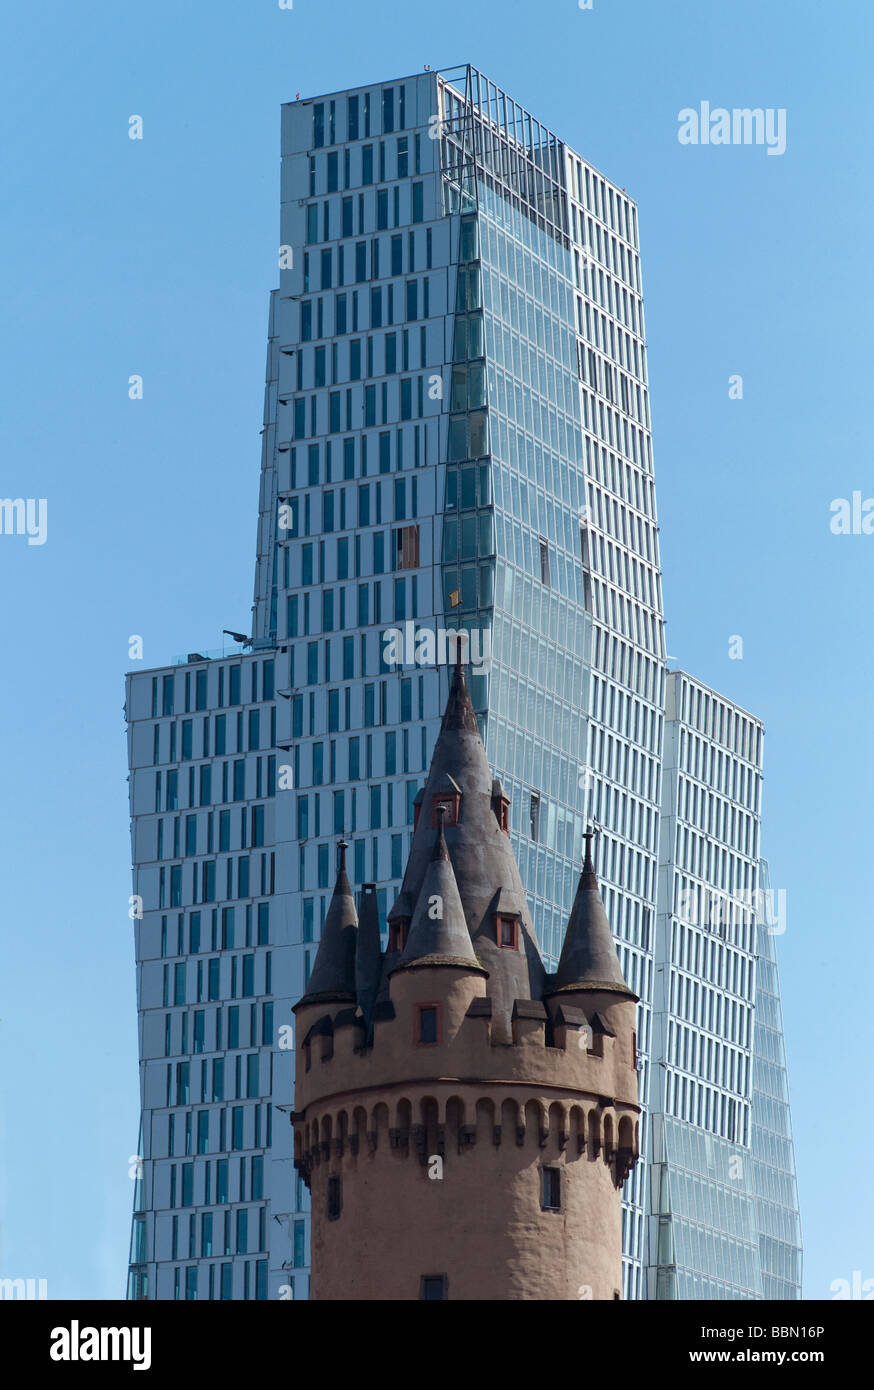 Eschenheimer Tower, city gate of the late medieval Frankfurt city walls, landmark of Frankfurt, office tower 135 meters in heig Stock Photo